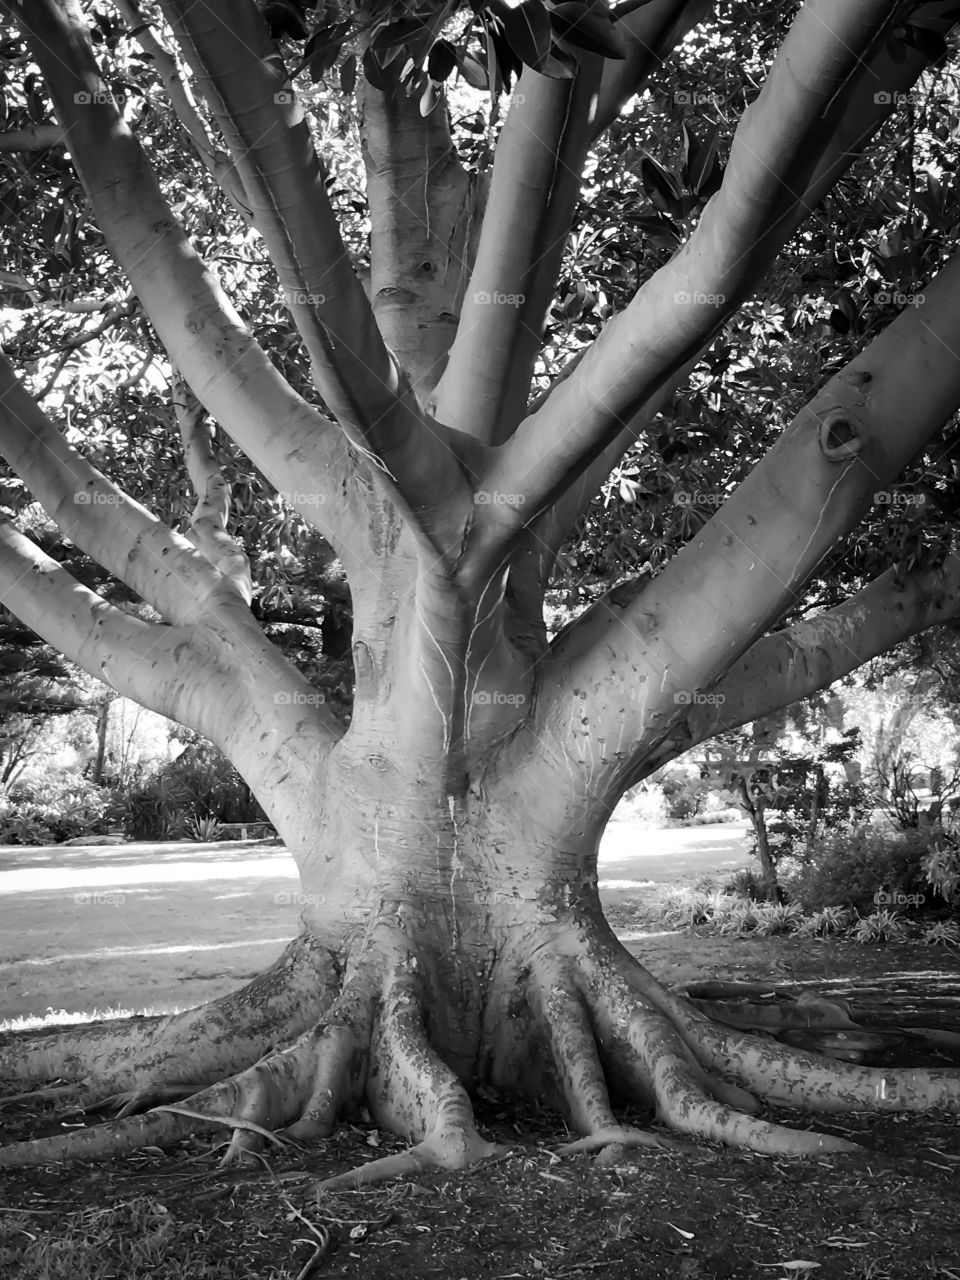 Moreton Bay Fig tree south Australia 